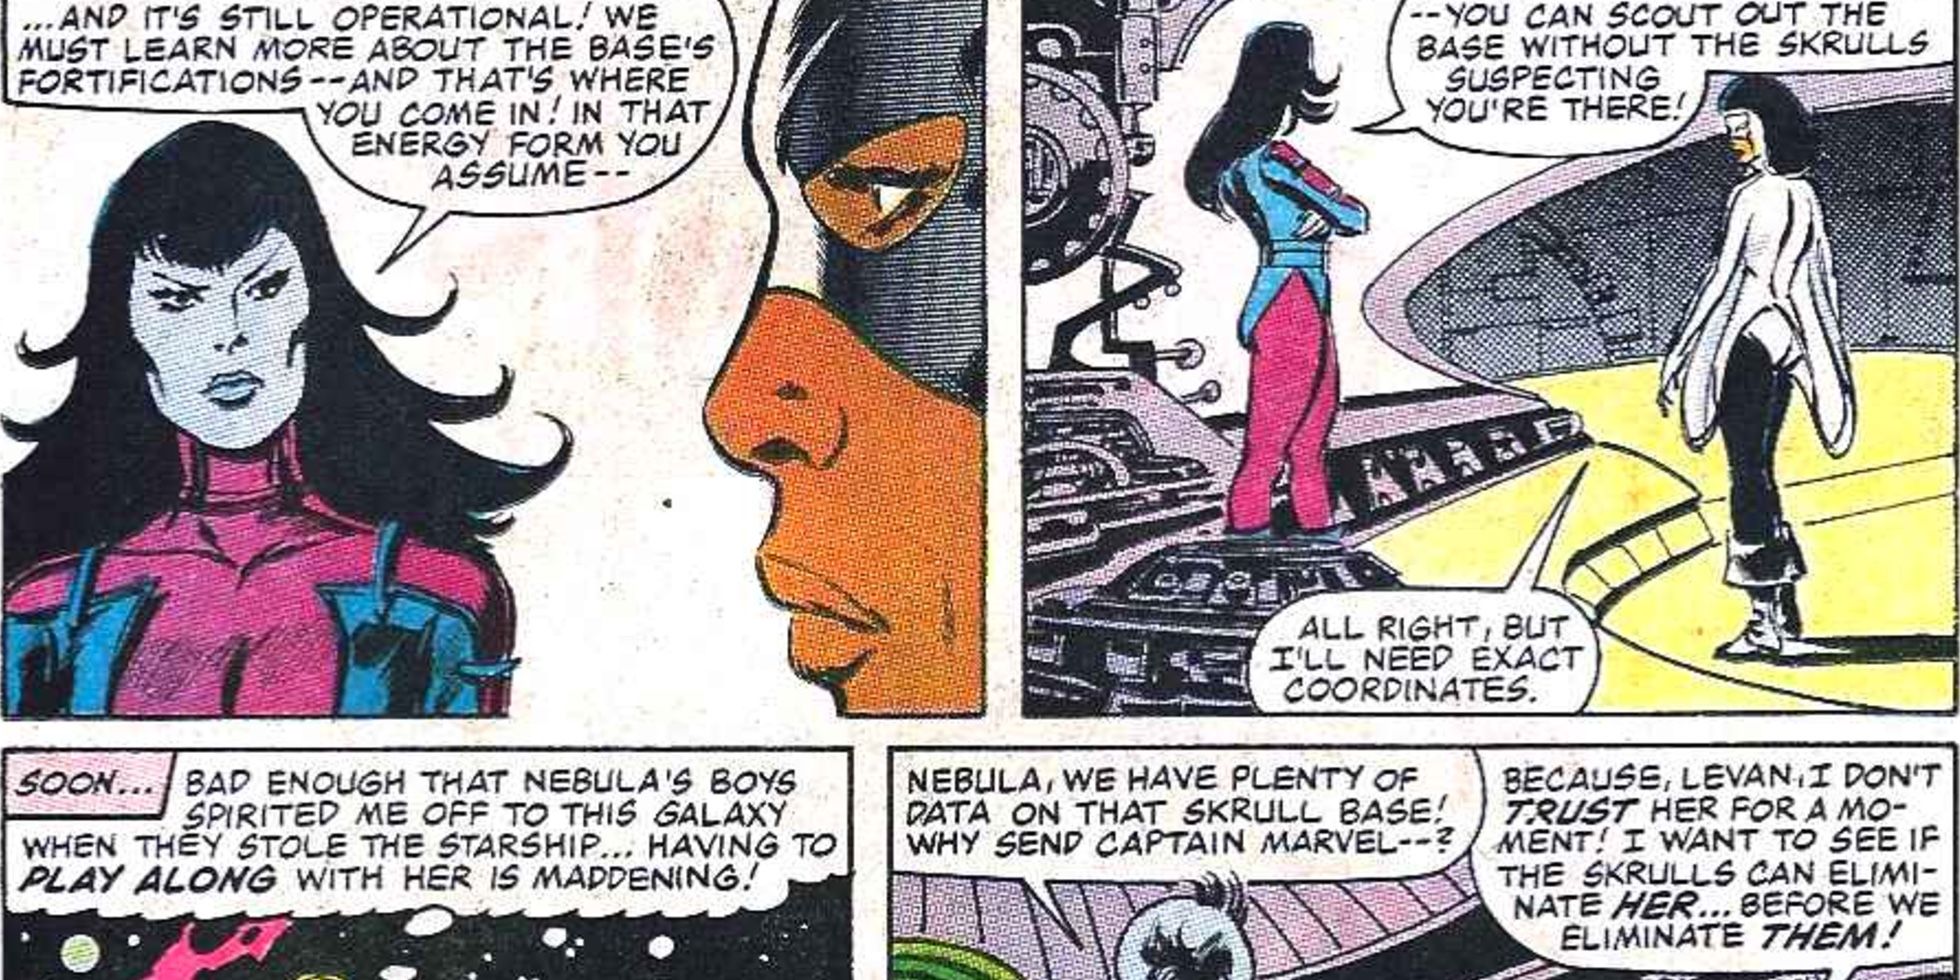 Nebula meets Captain Marvel Monica Rambeau in Avengers 257